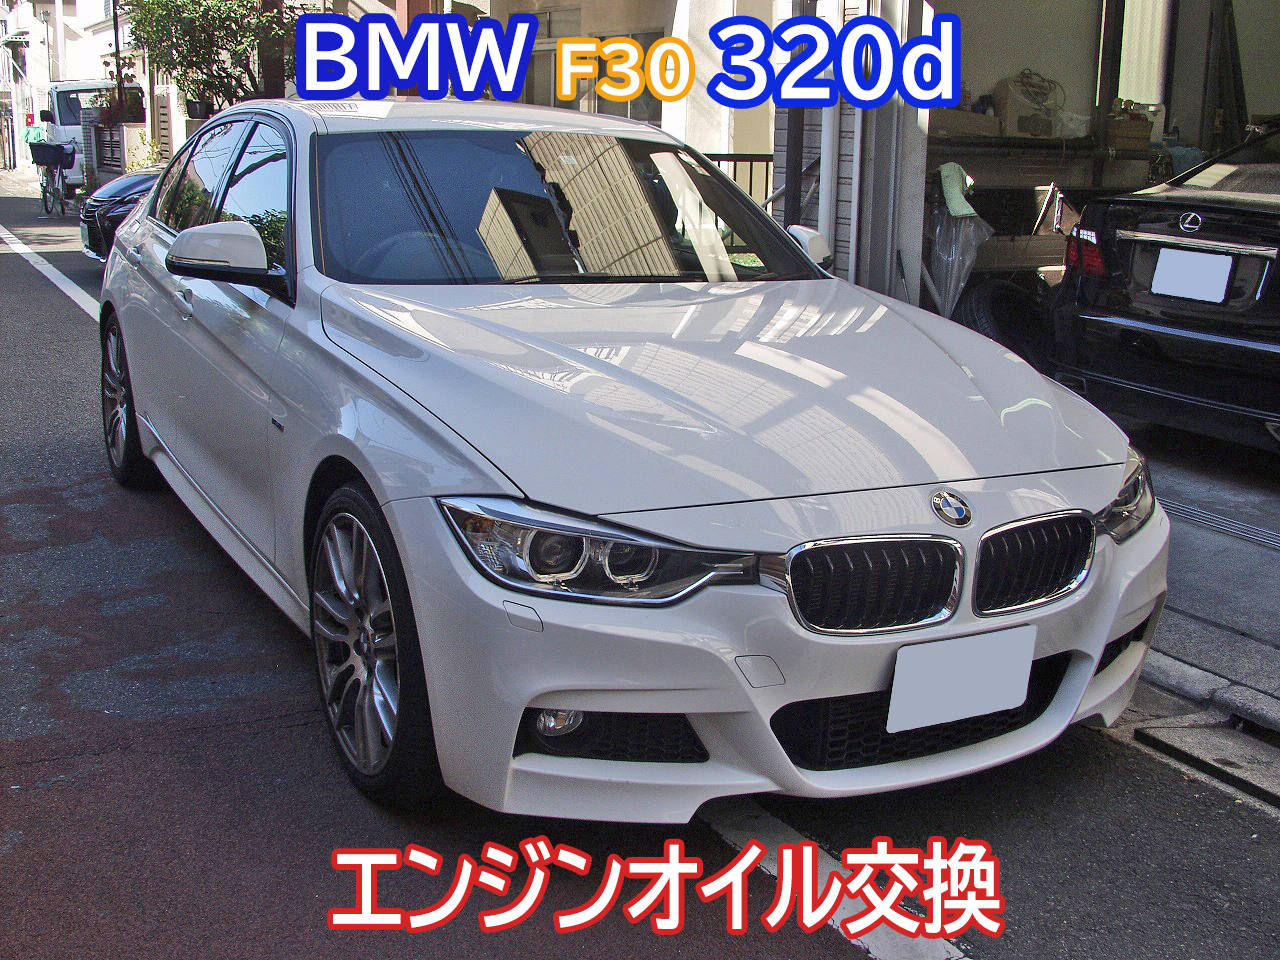 BMW F30 320dのエンジンオイル交換は純正または認証オイルを使用します。